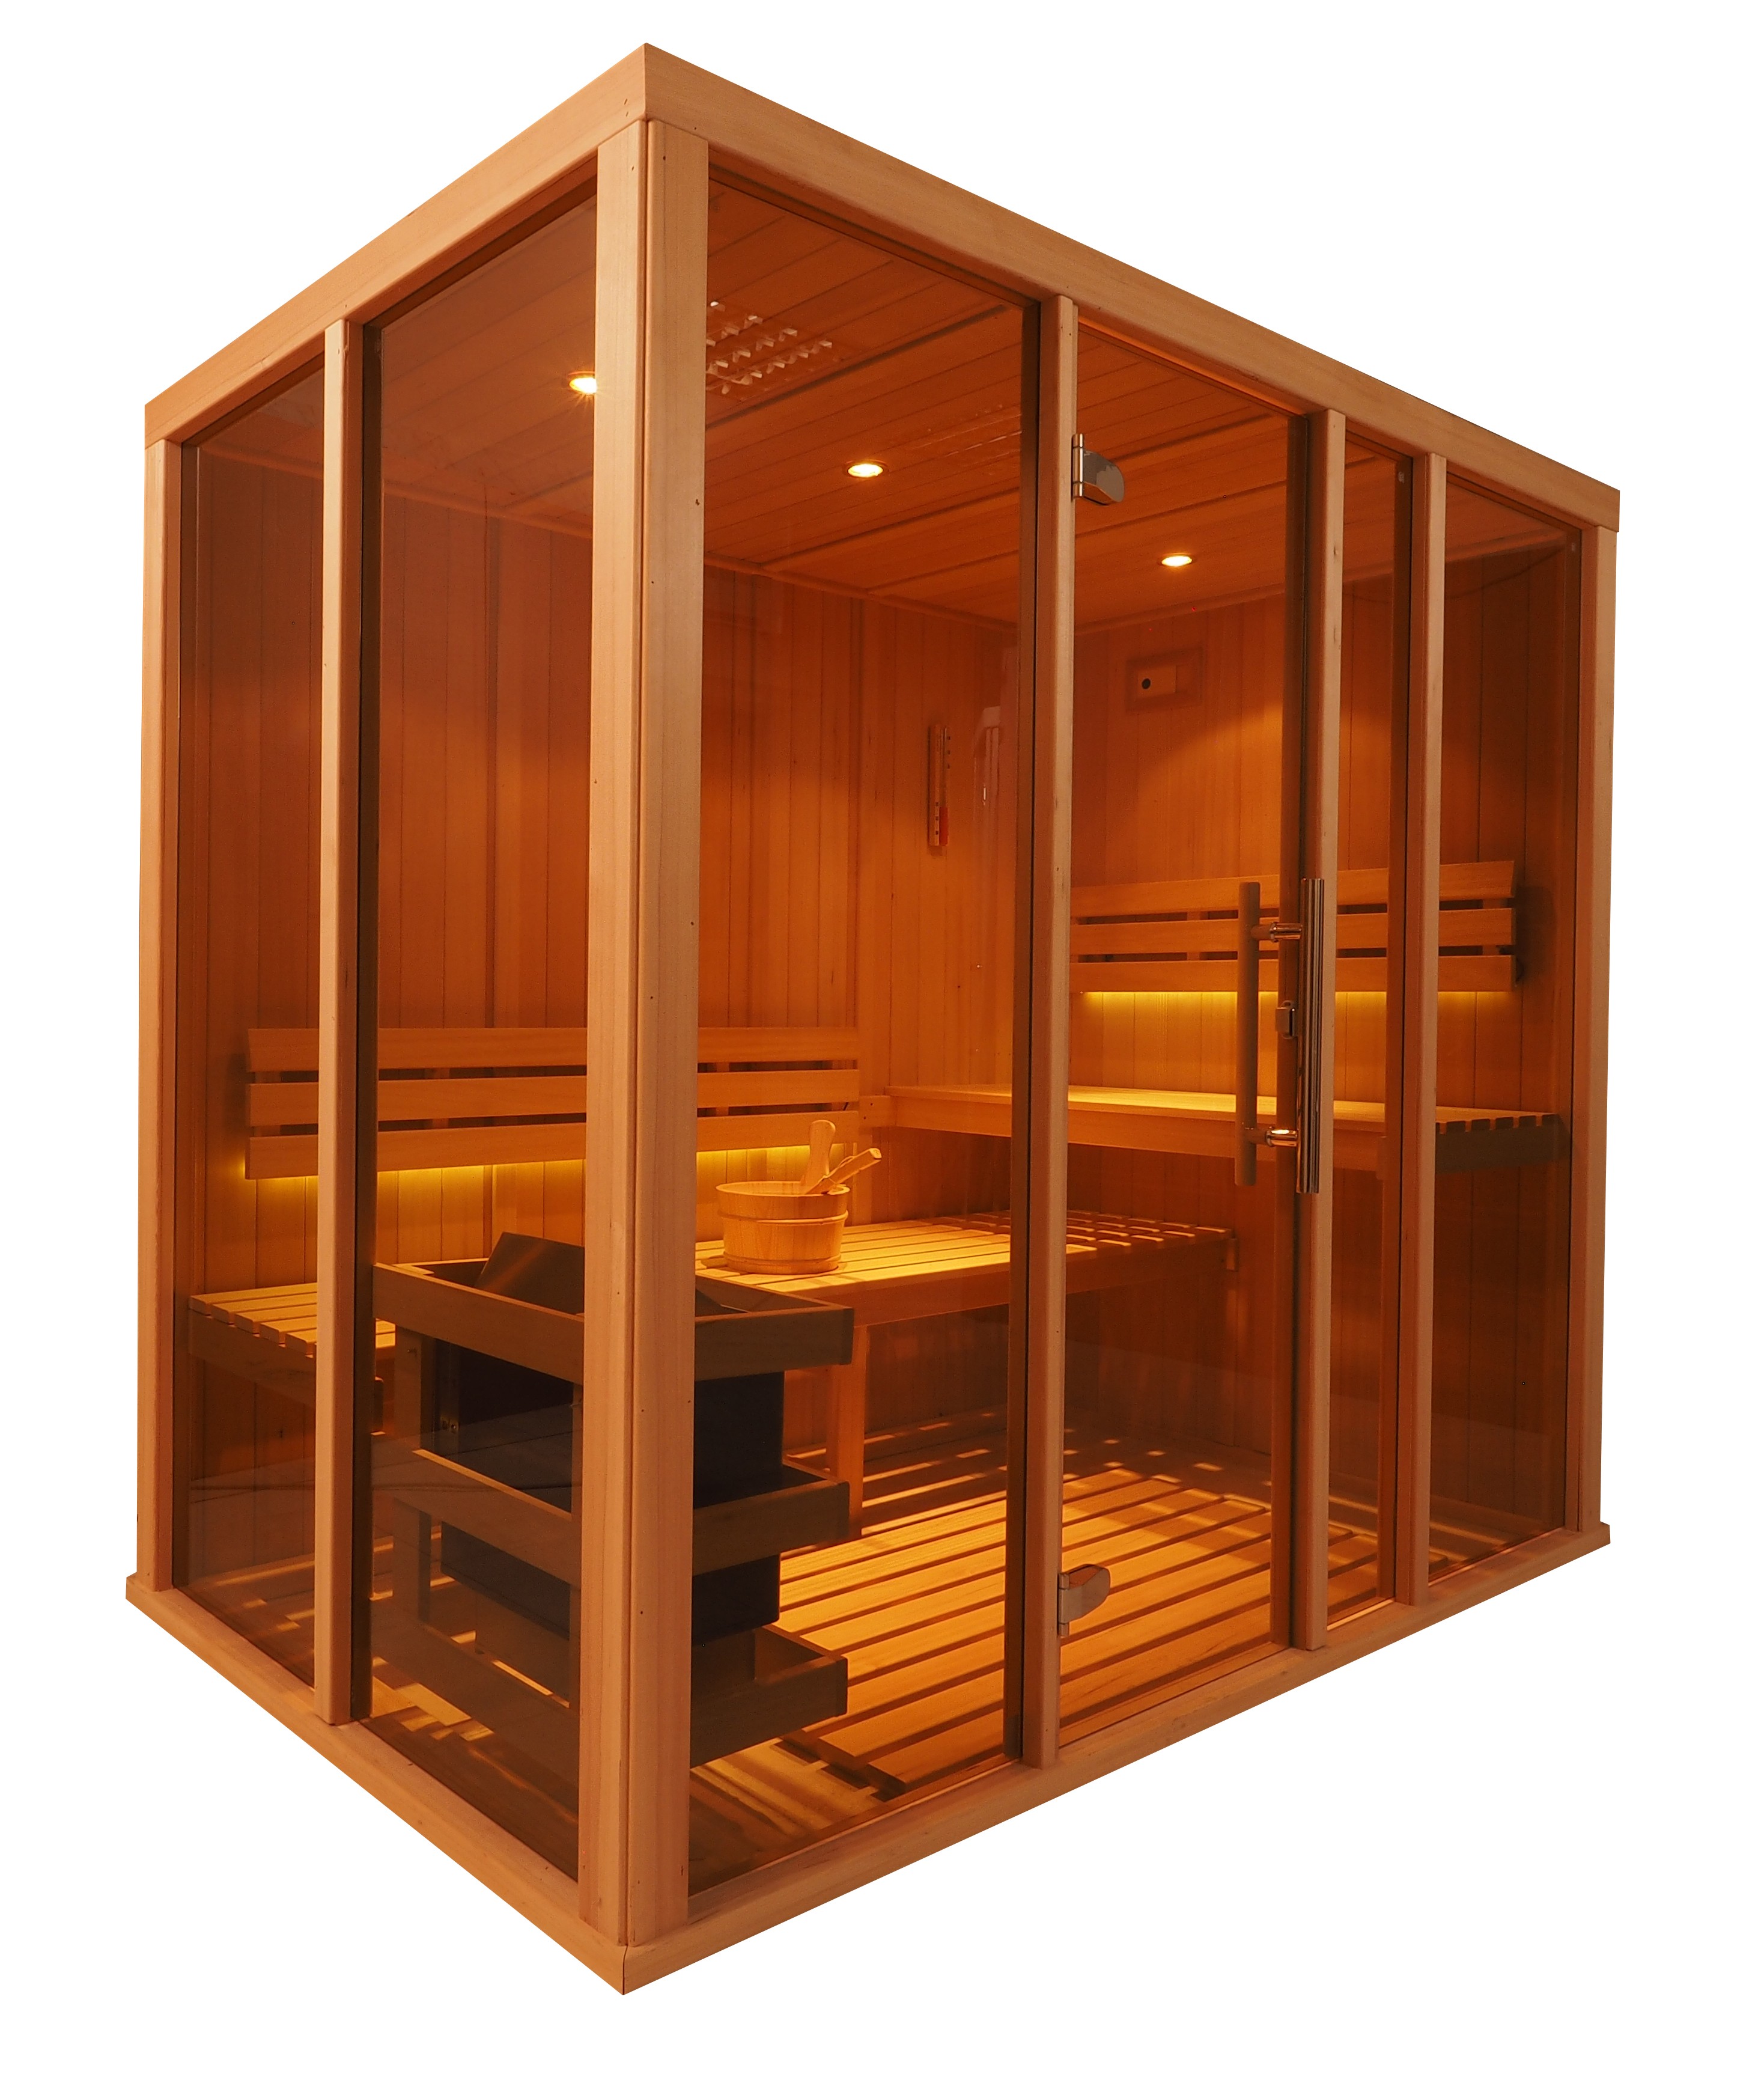 V2035 Vision Sauna Cabin